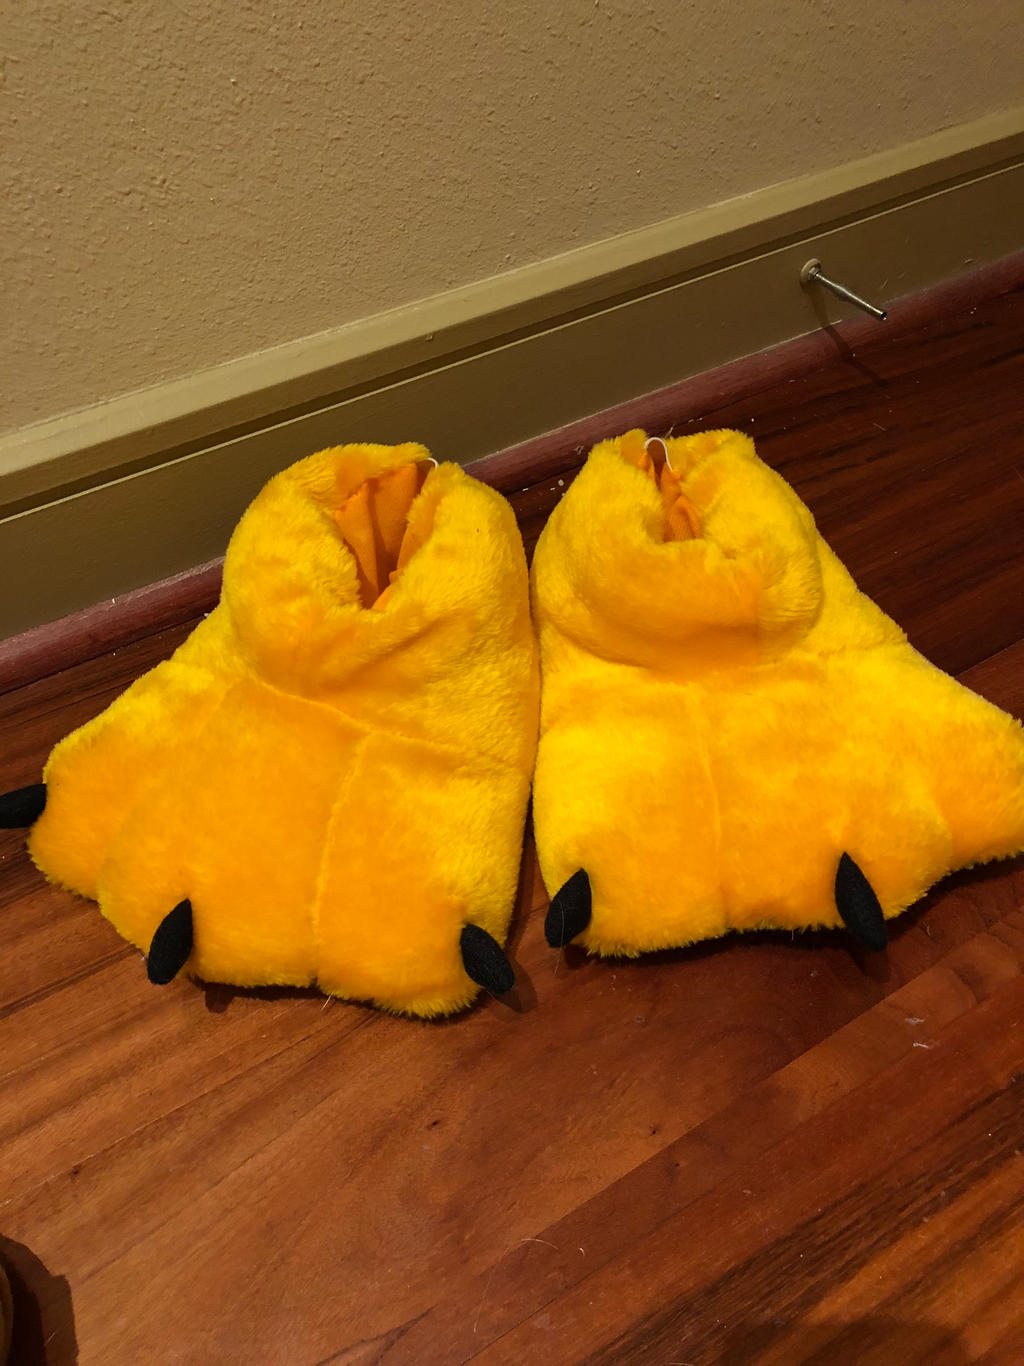 Chicken feet slippers by chingadera841 on DeviantArt